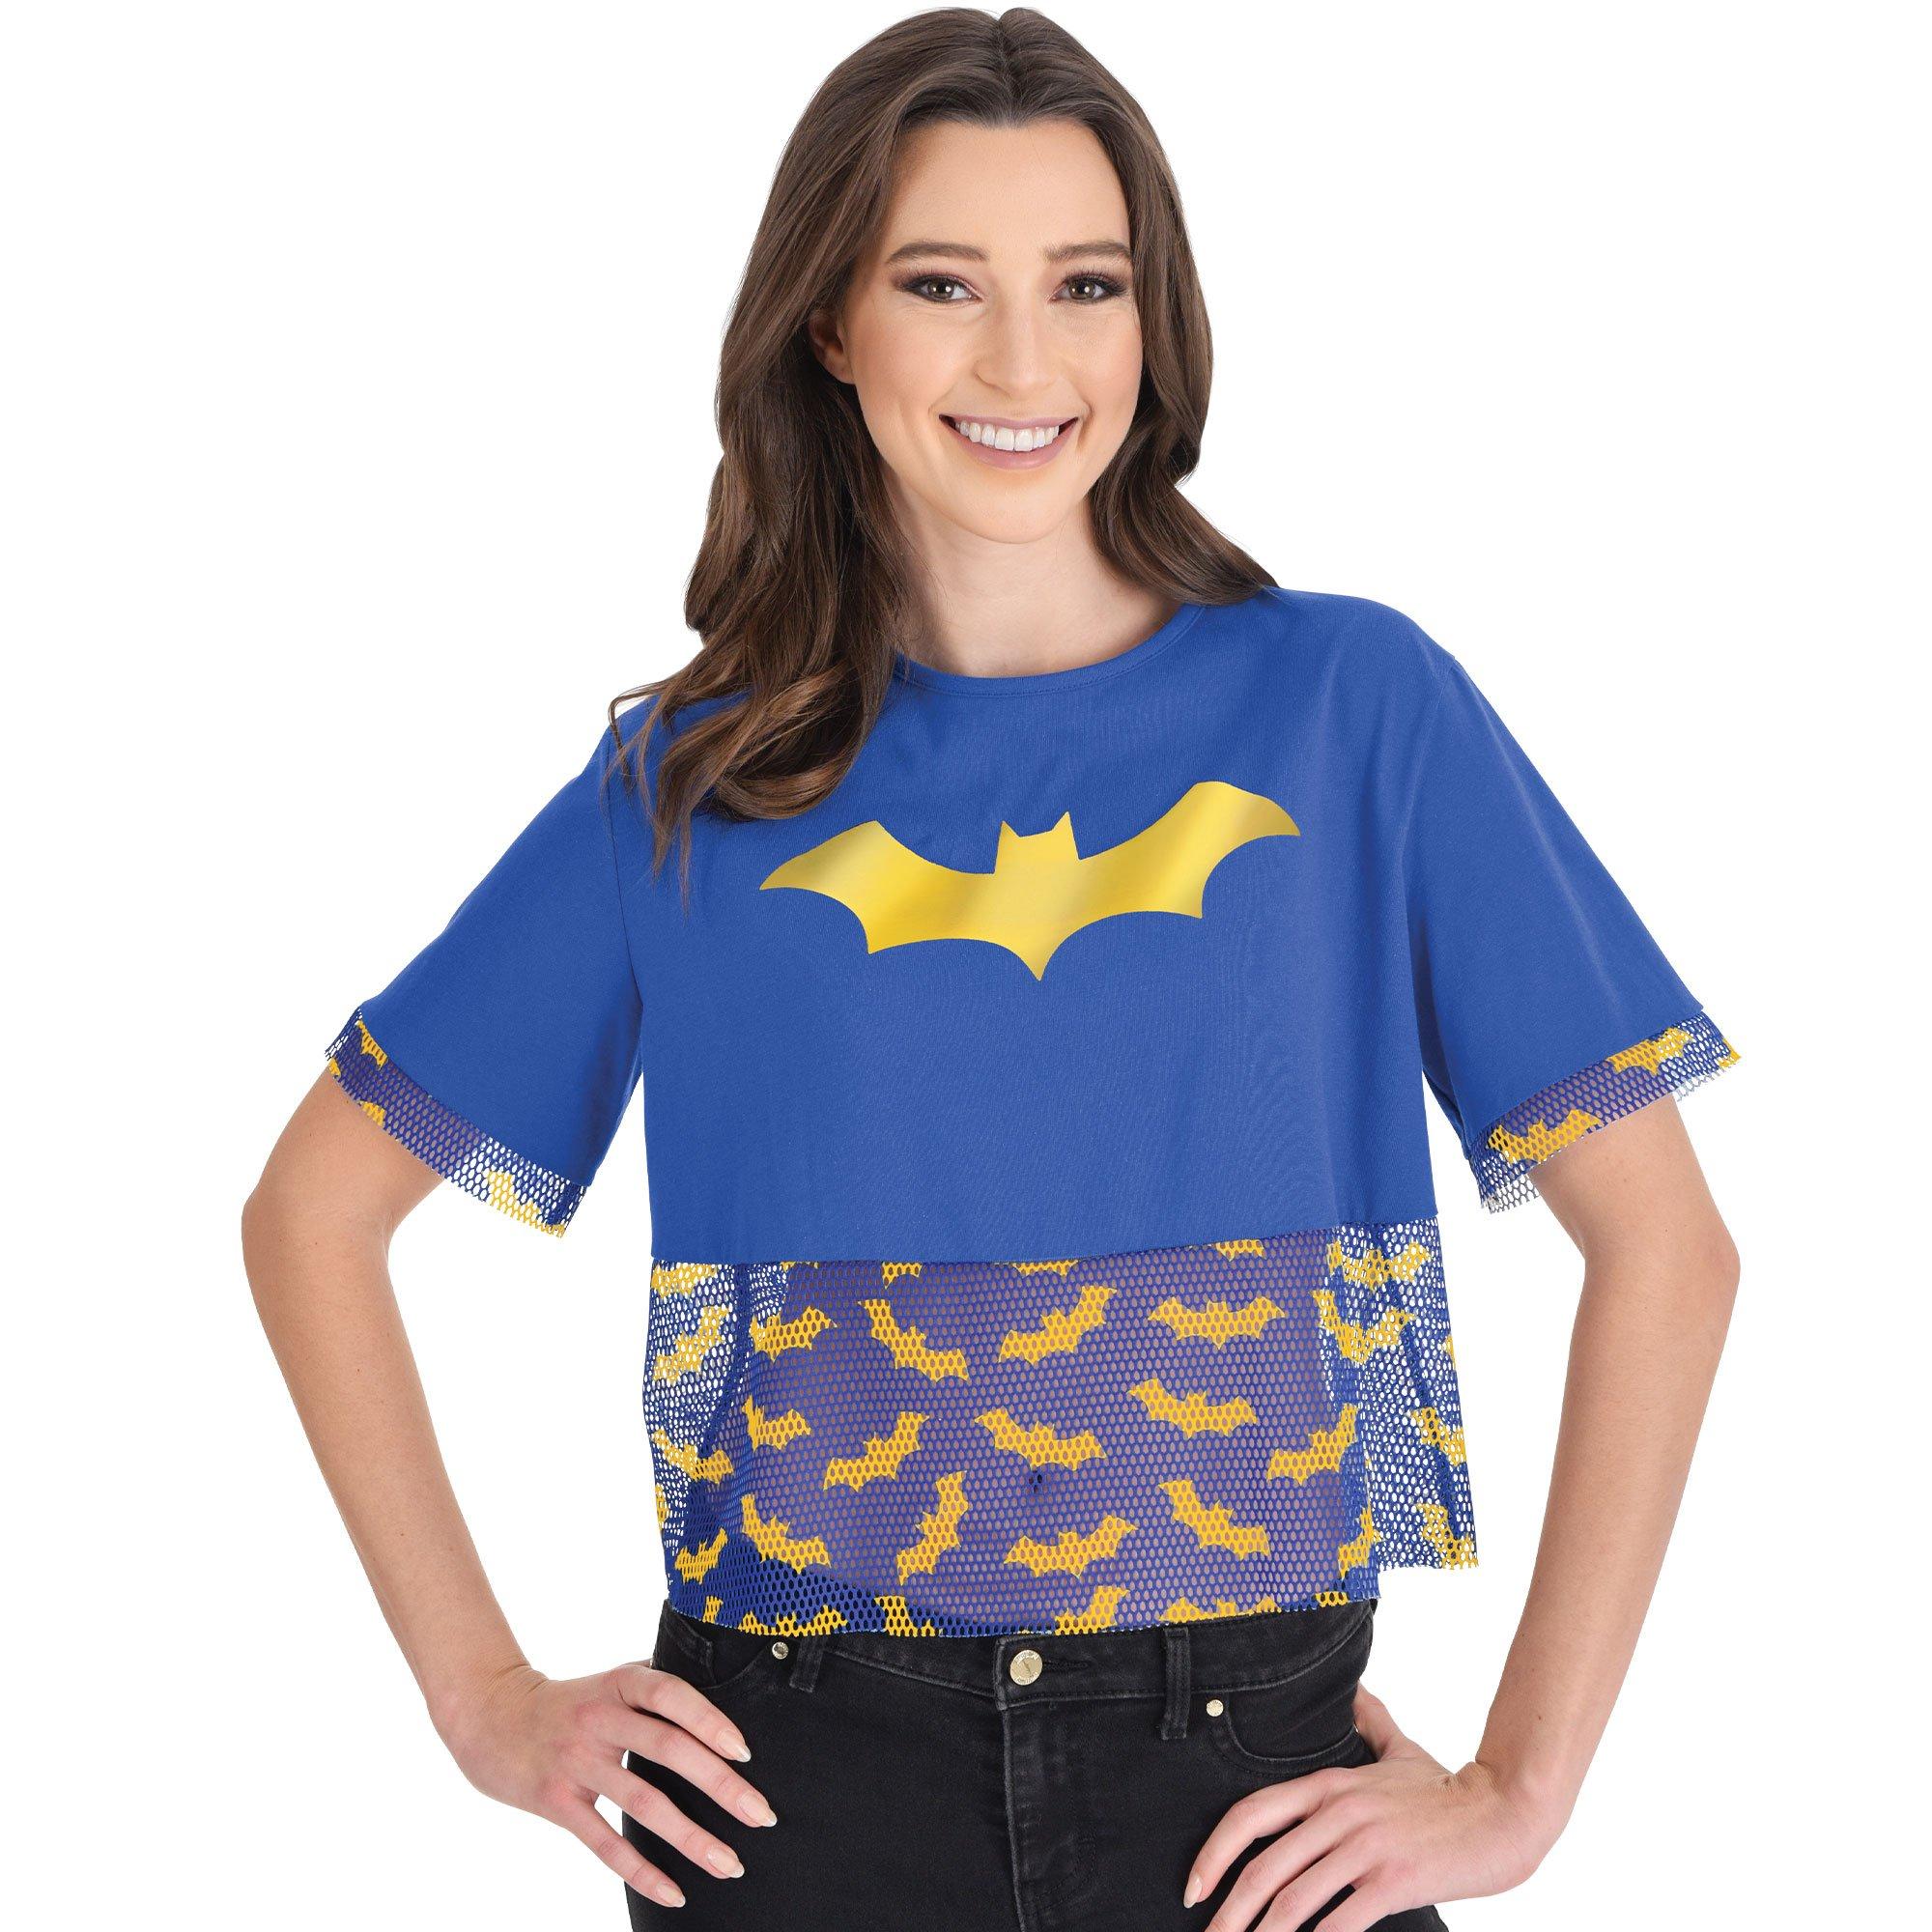 batgirl and batman couple shirts